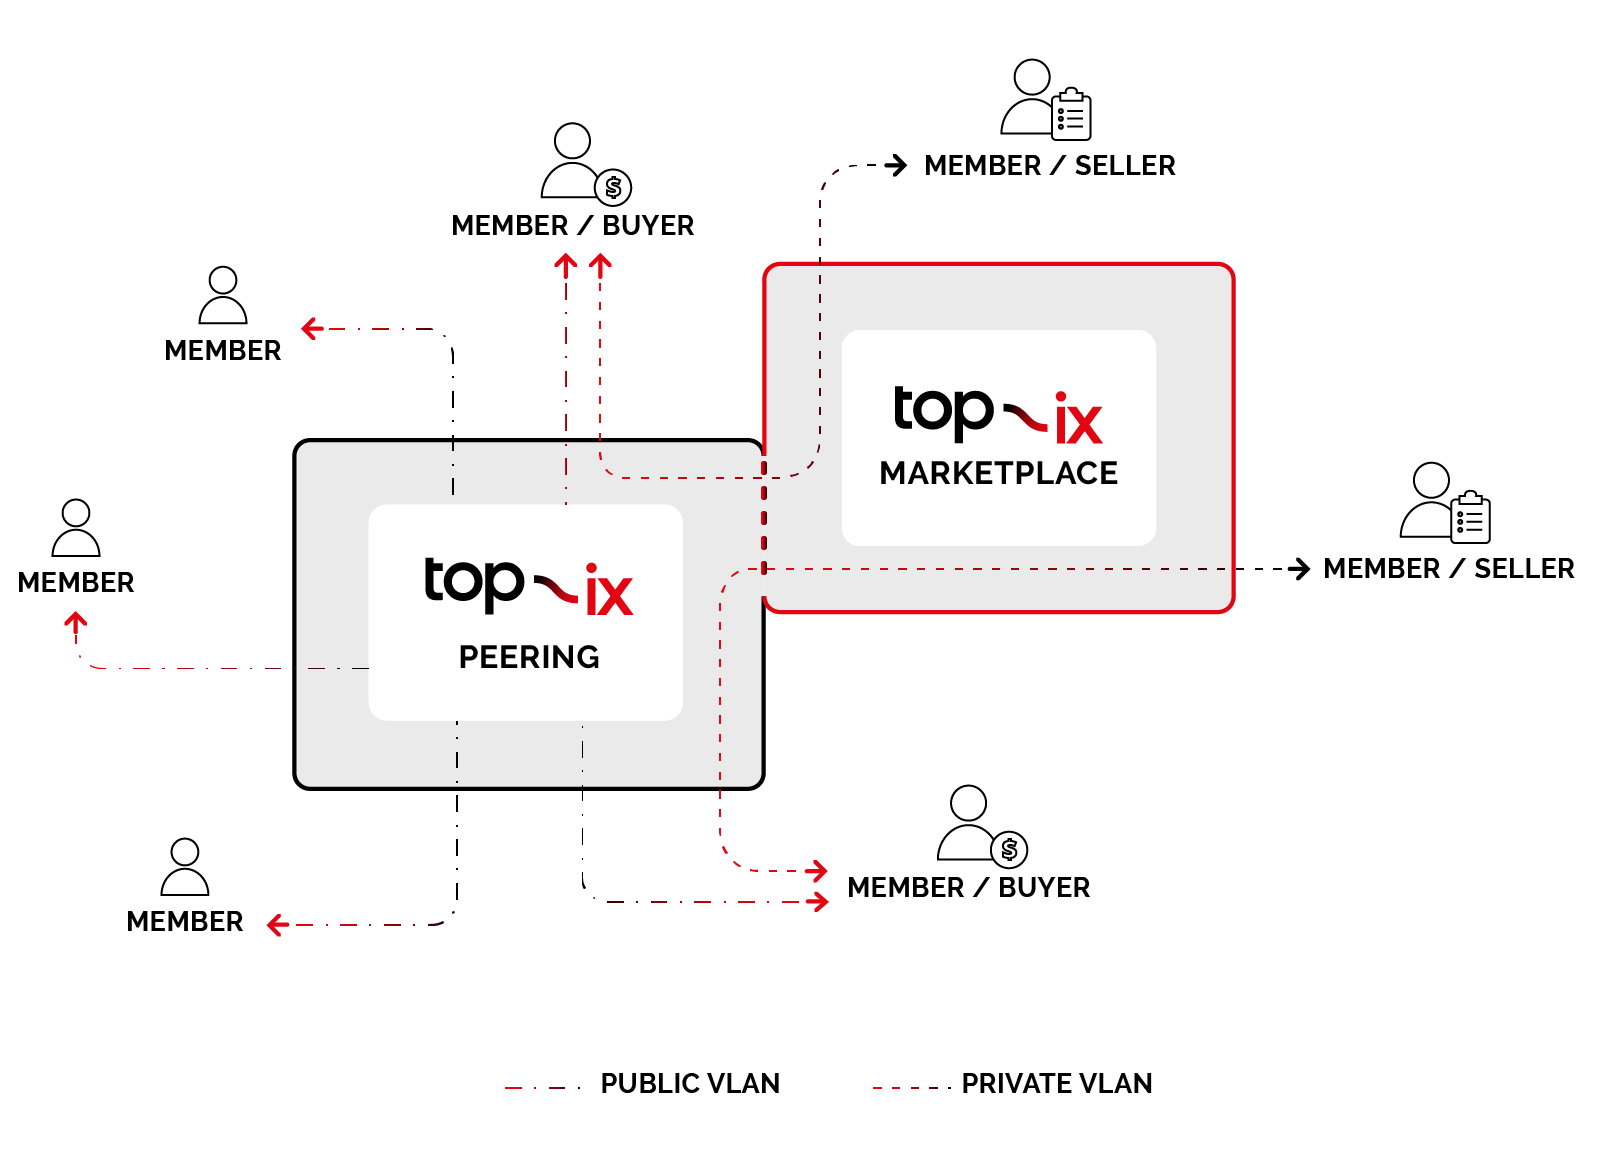 TOP-IX Marketplace Scheme